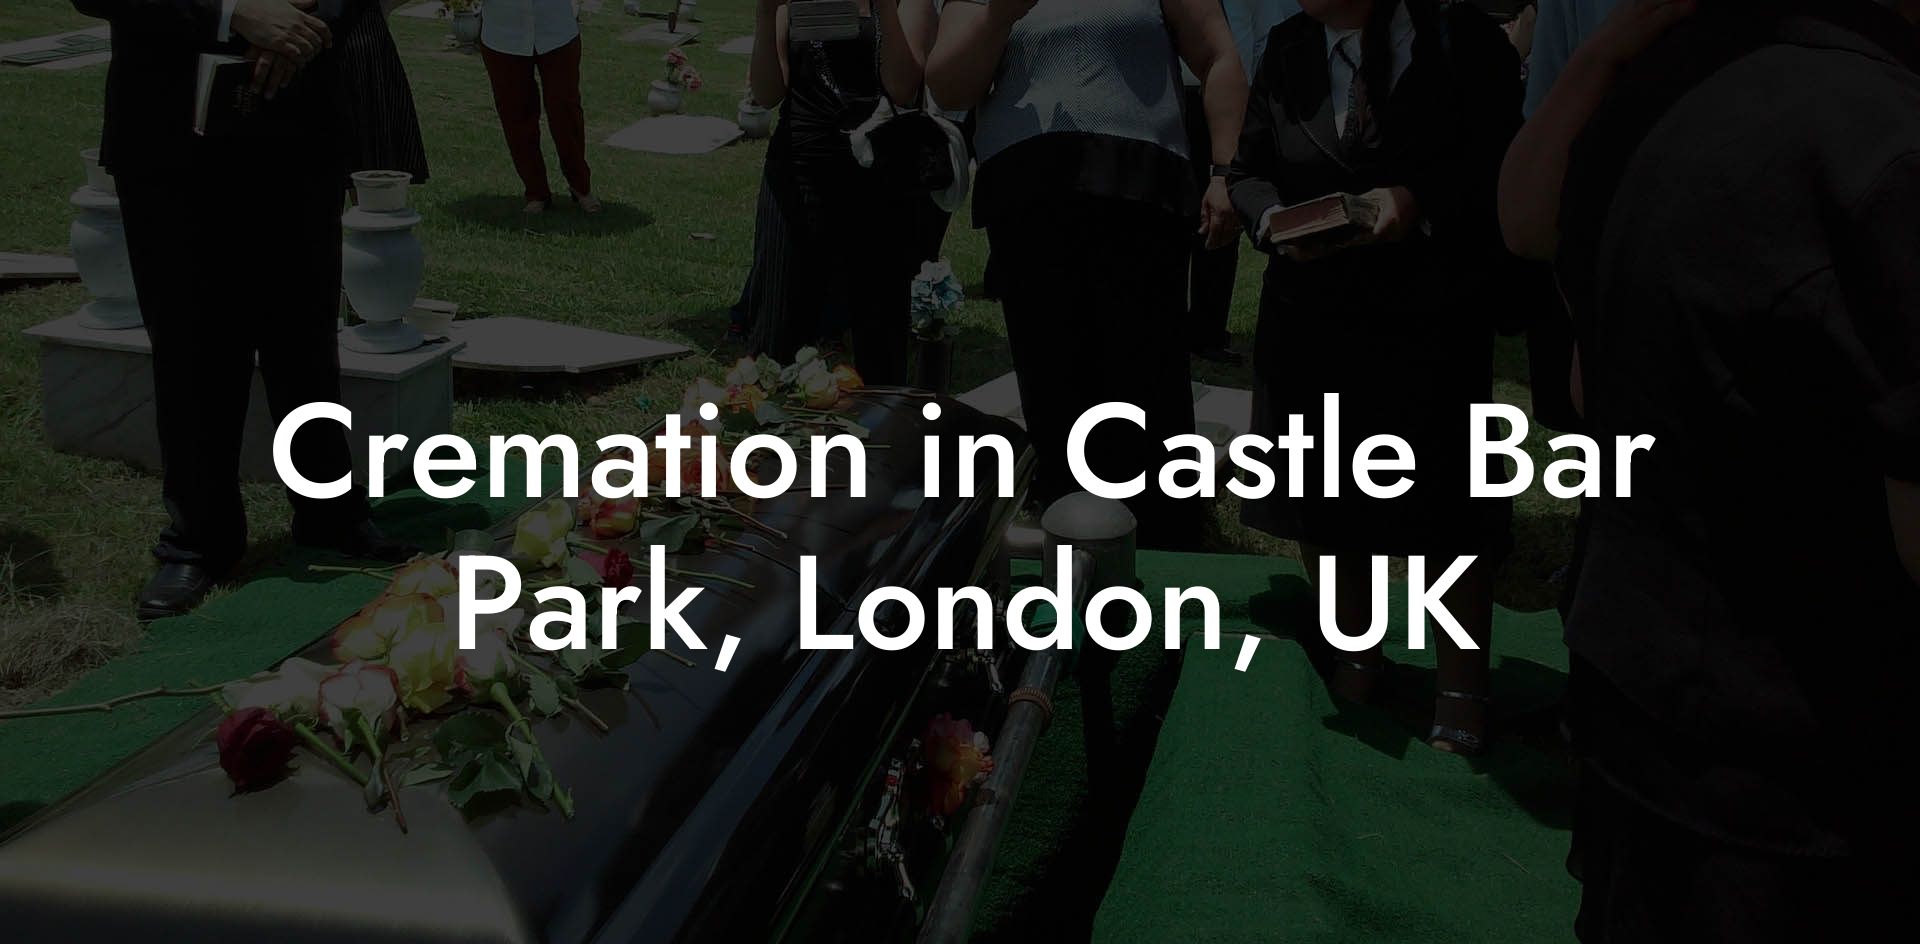 Cremation in Castle Bar Park, London, UK